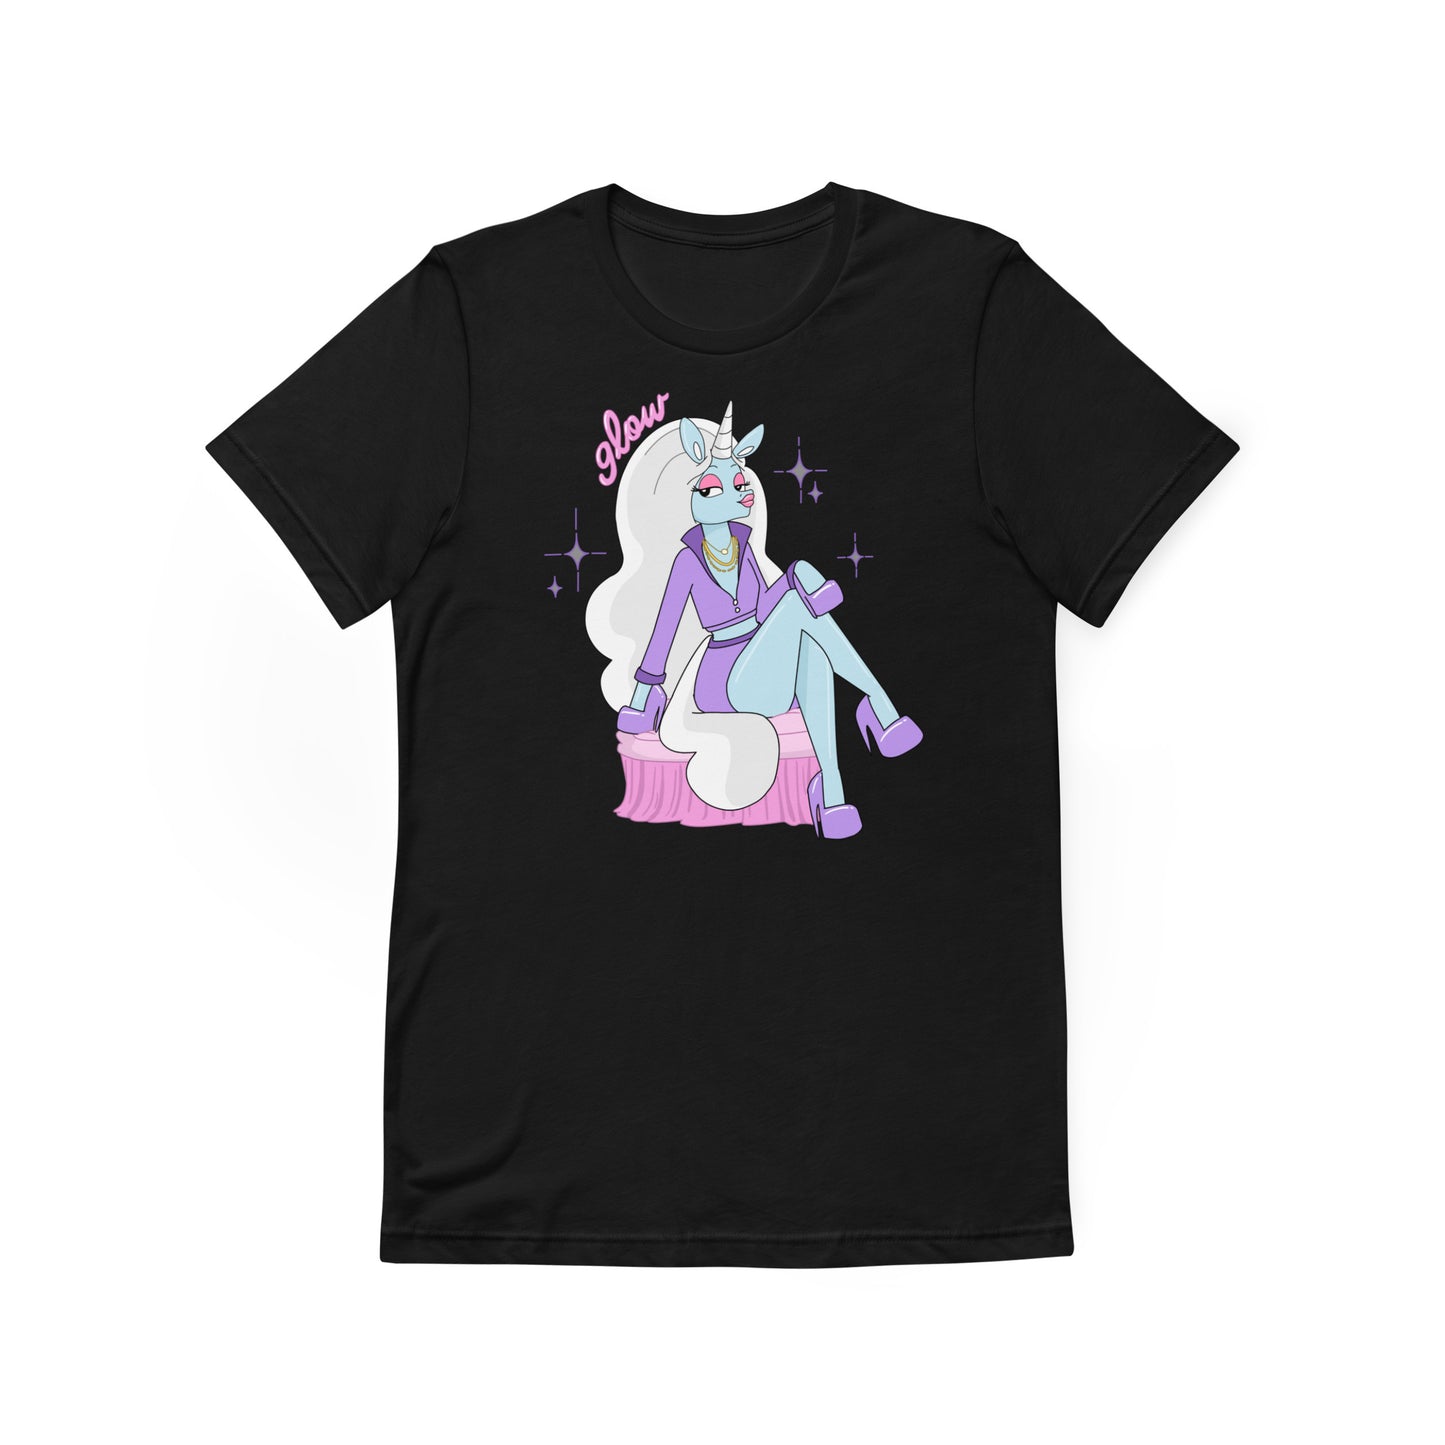 stunning unicorn shirt in black front